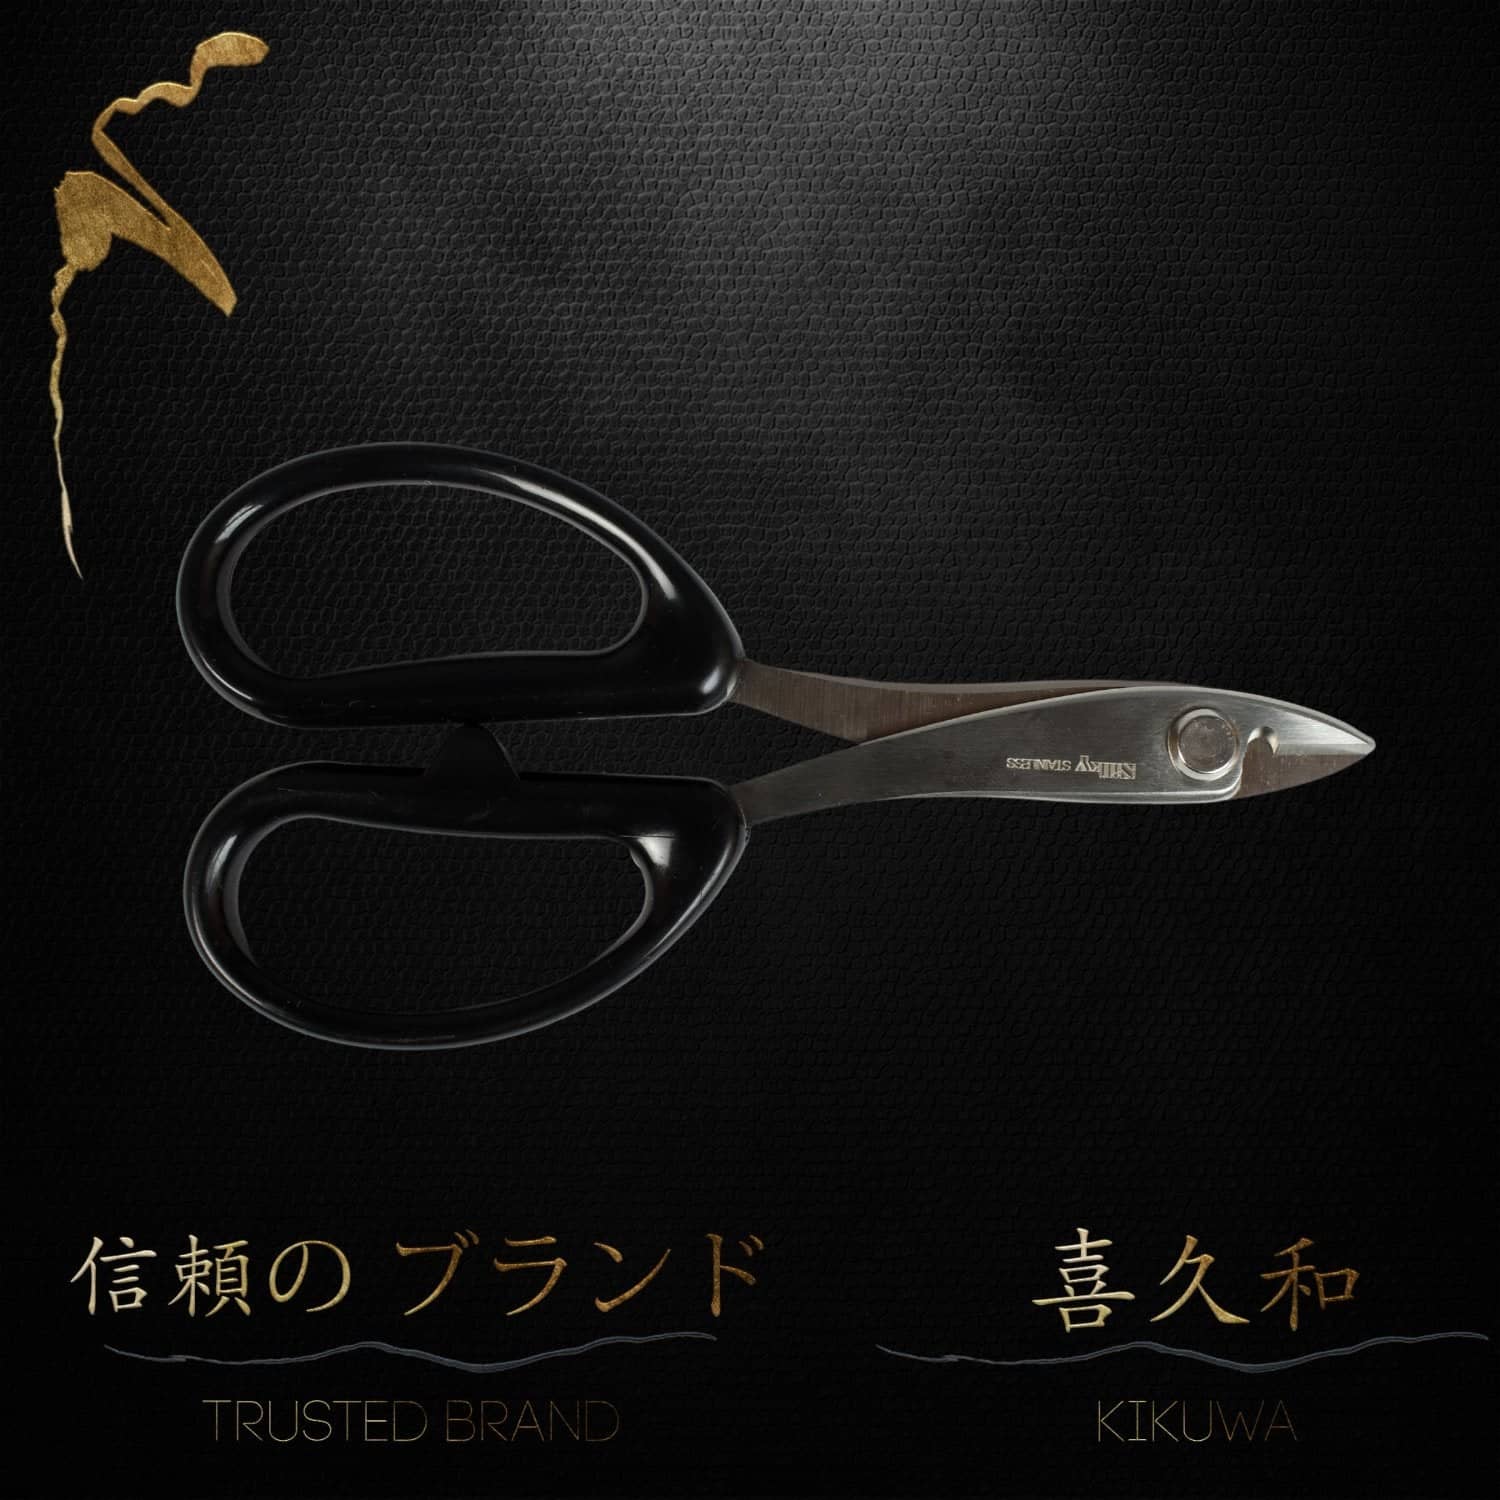 Kikuwa 160mm Stainless Steel Scissors Type Bonsai Wire Cutter